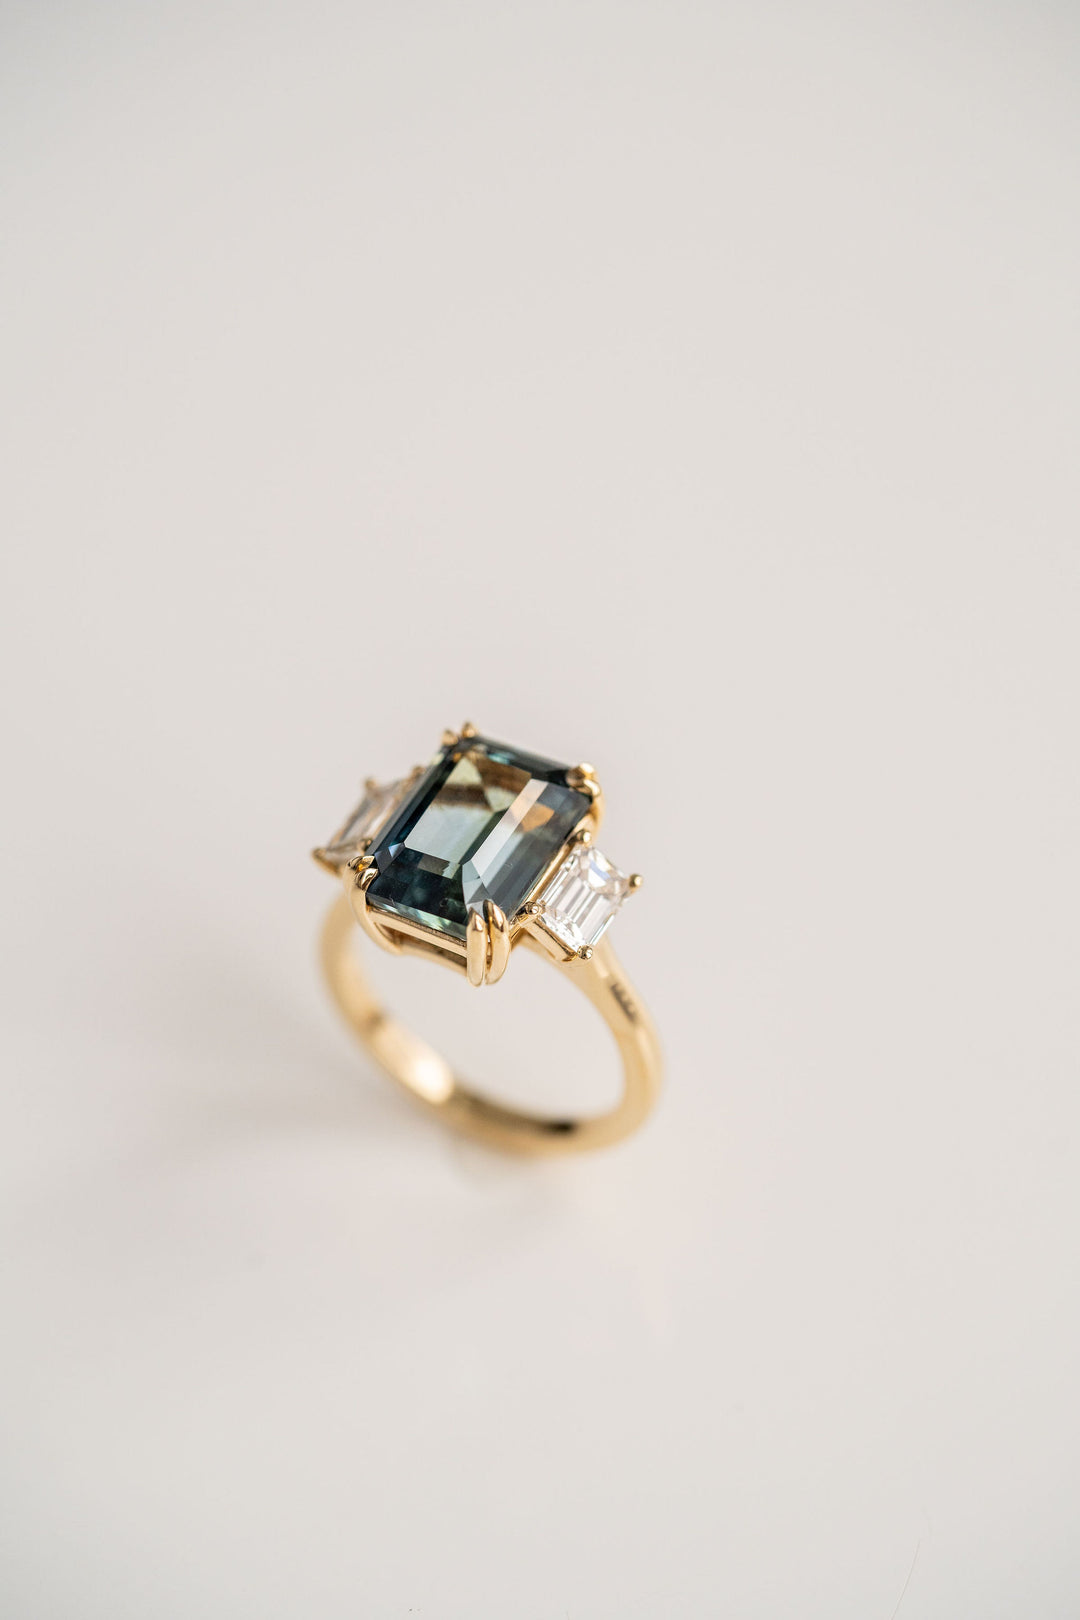 7.00ct. Emerald Cut Teal Sri Lankan Sapphire With Emerald Cut Diamond Accents, 14k Yellow Gold